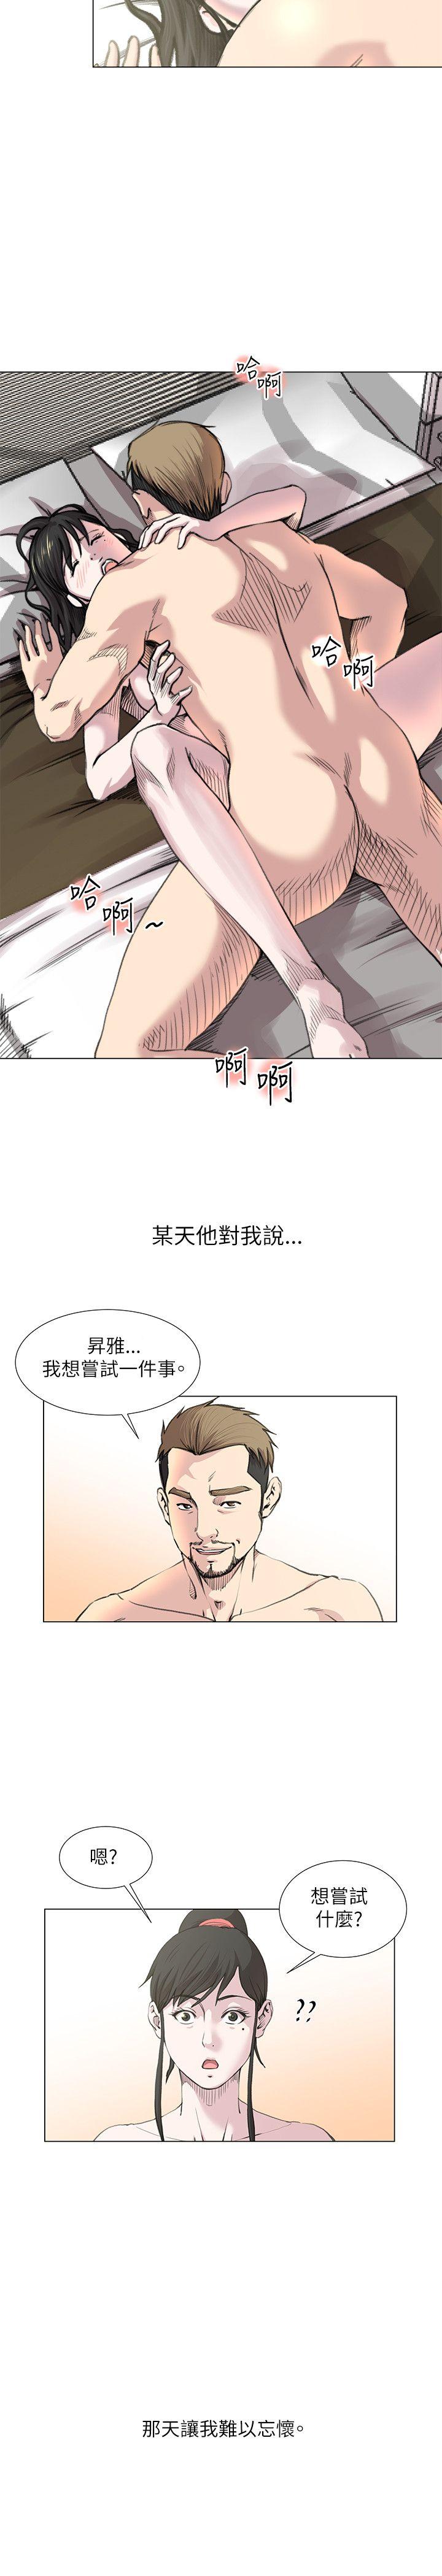 韩国污漫画 OFFICE TROUBLE 第20话 2